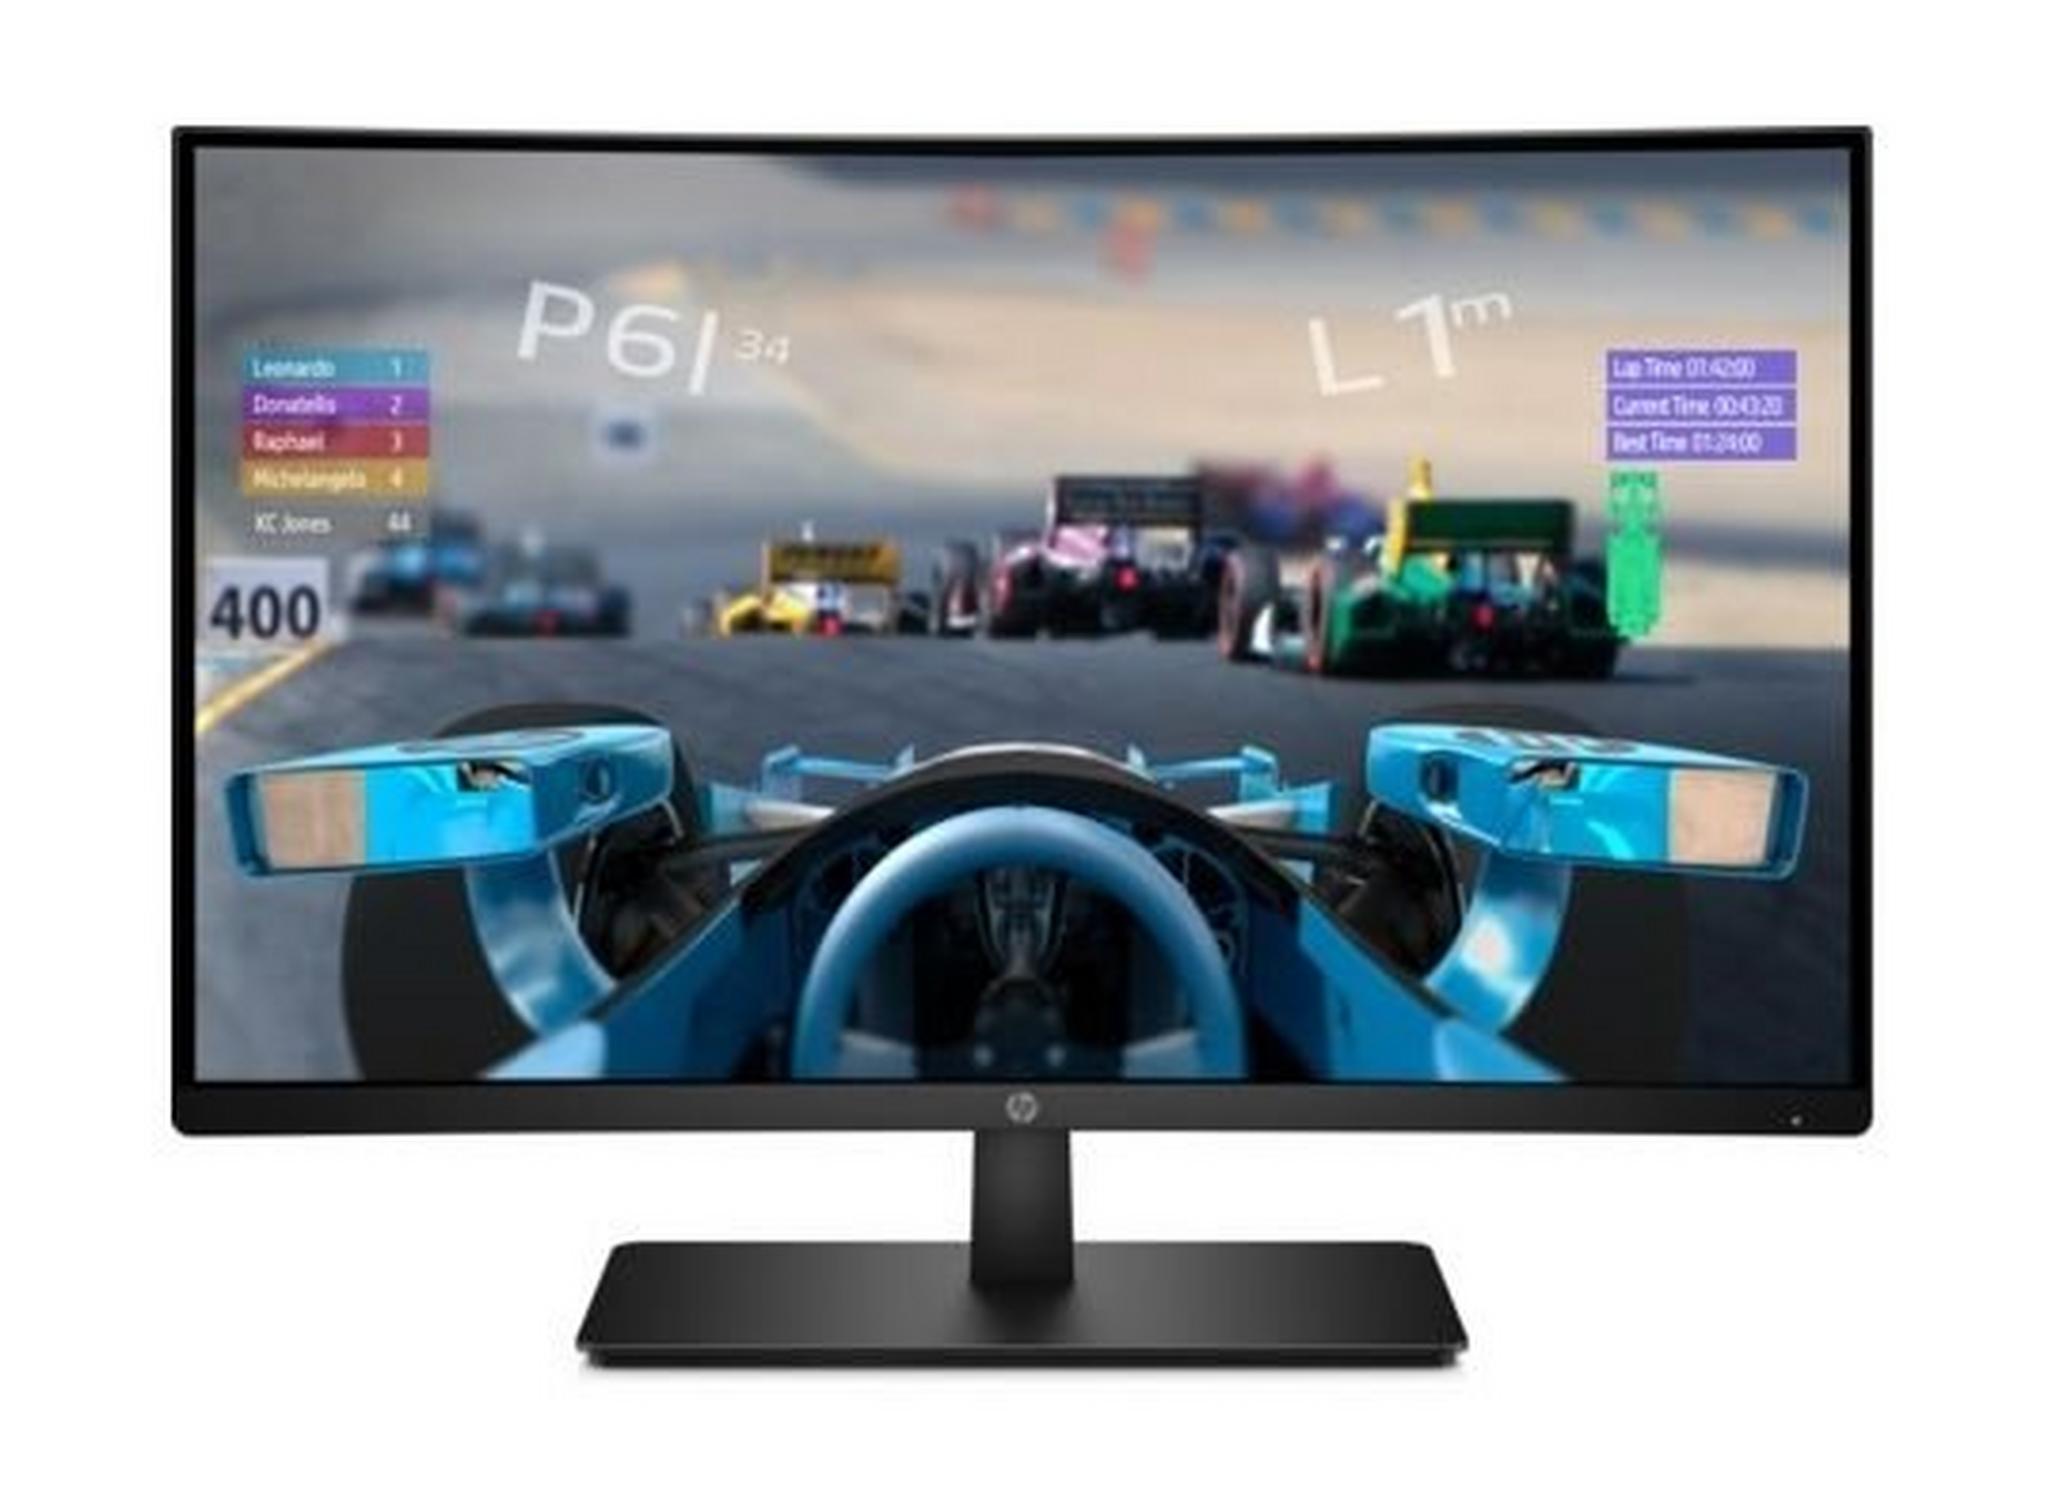 HP 27-inch Full HD Curved Gaming Monitor - 1AT01AA